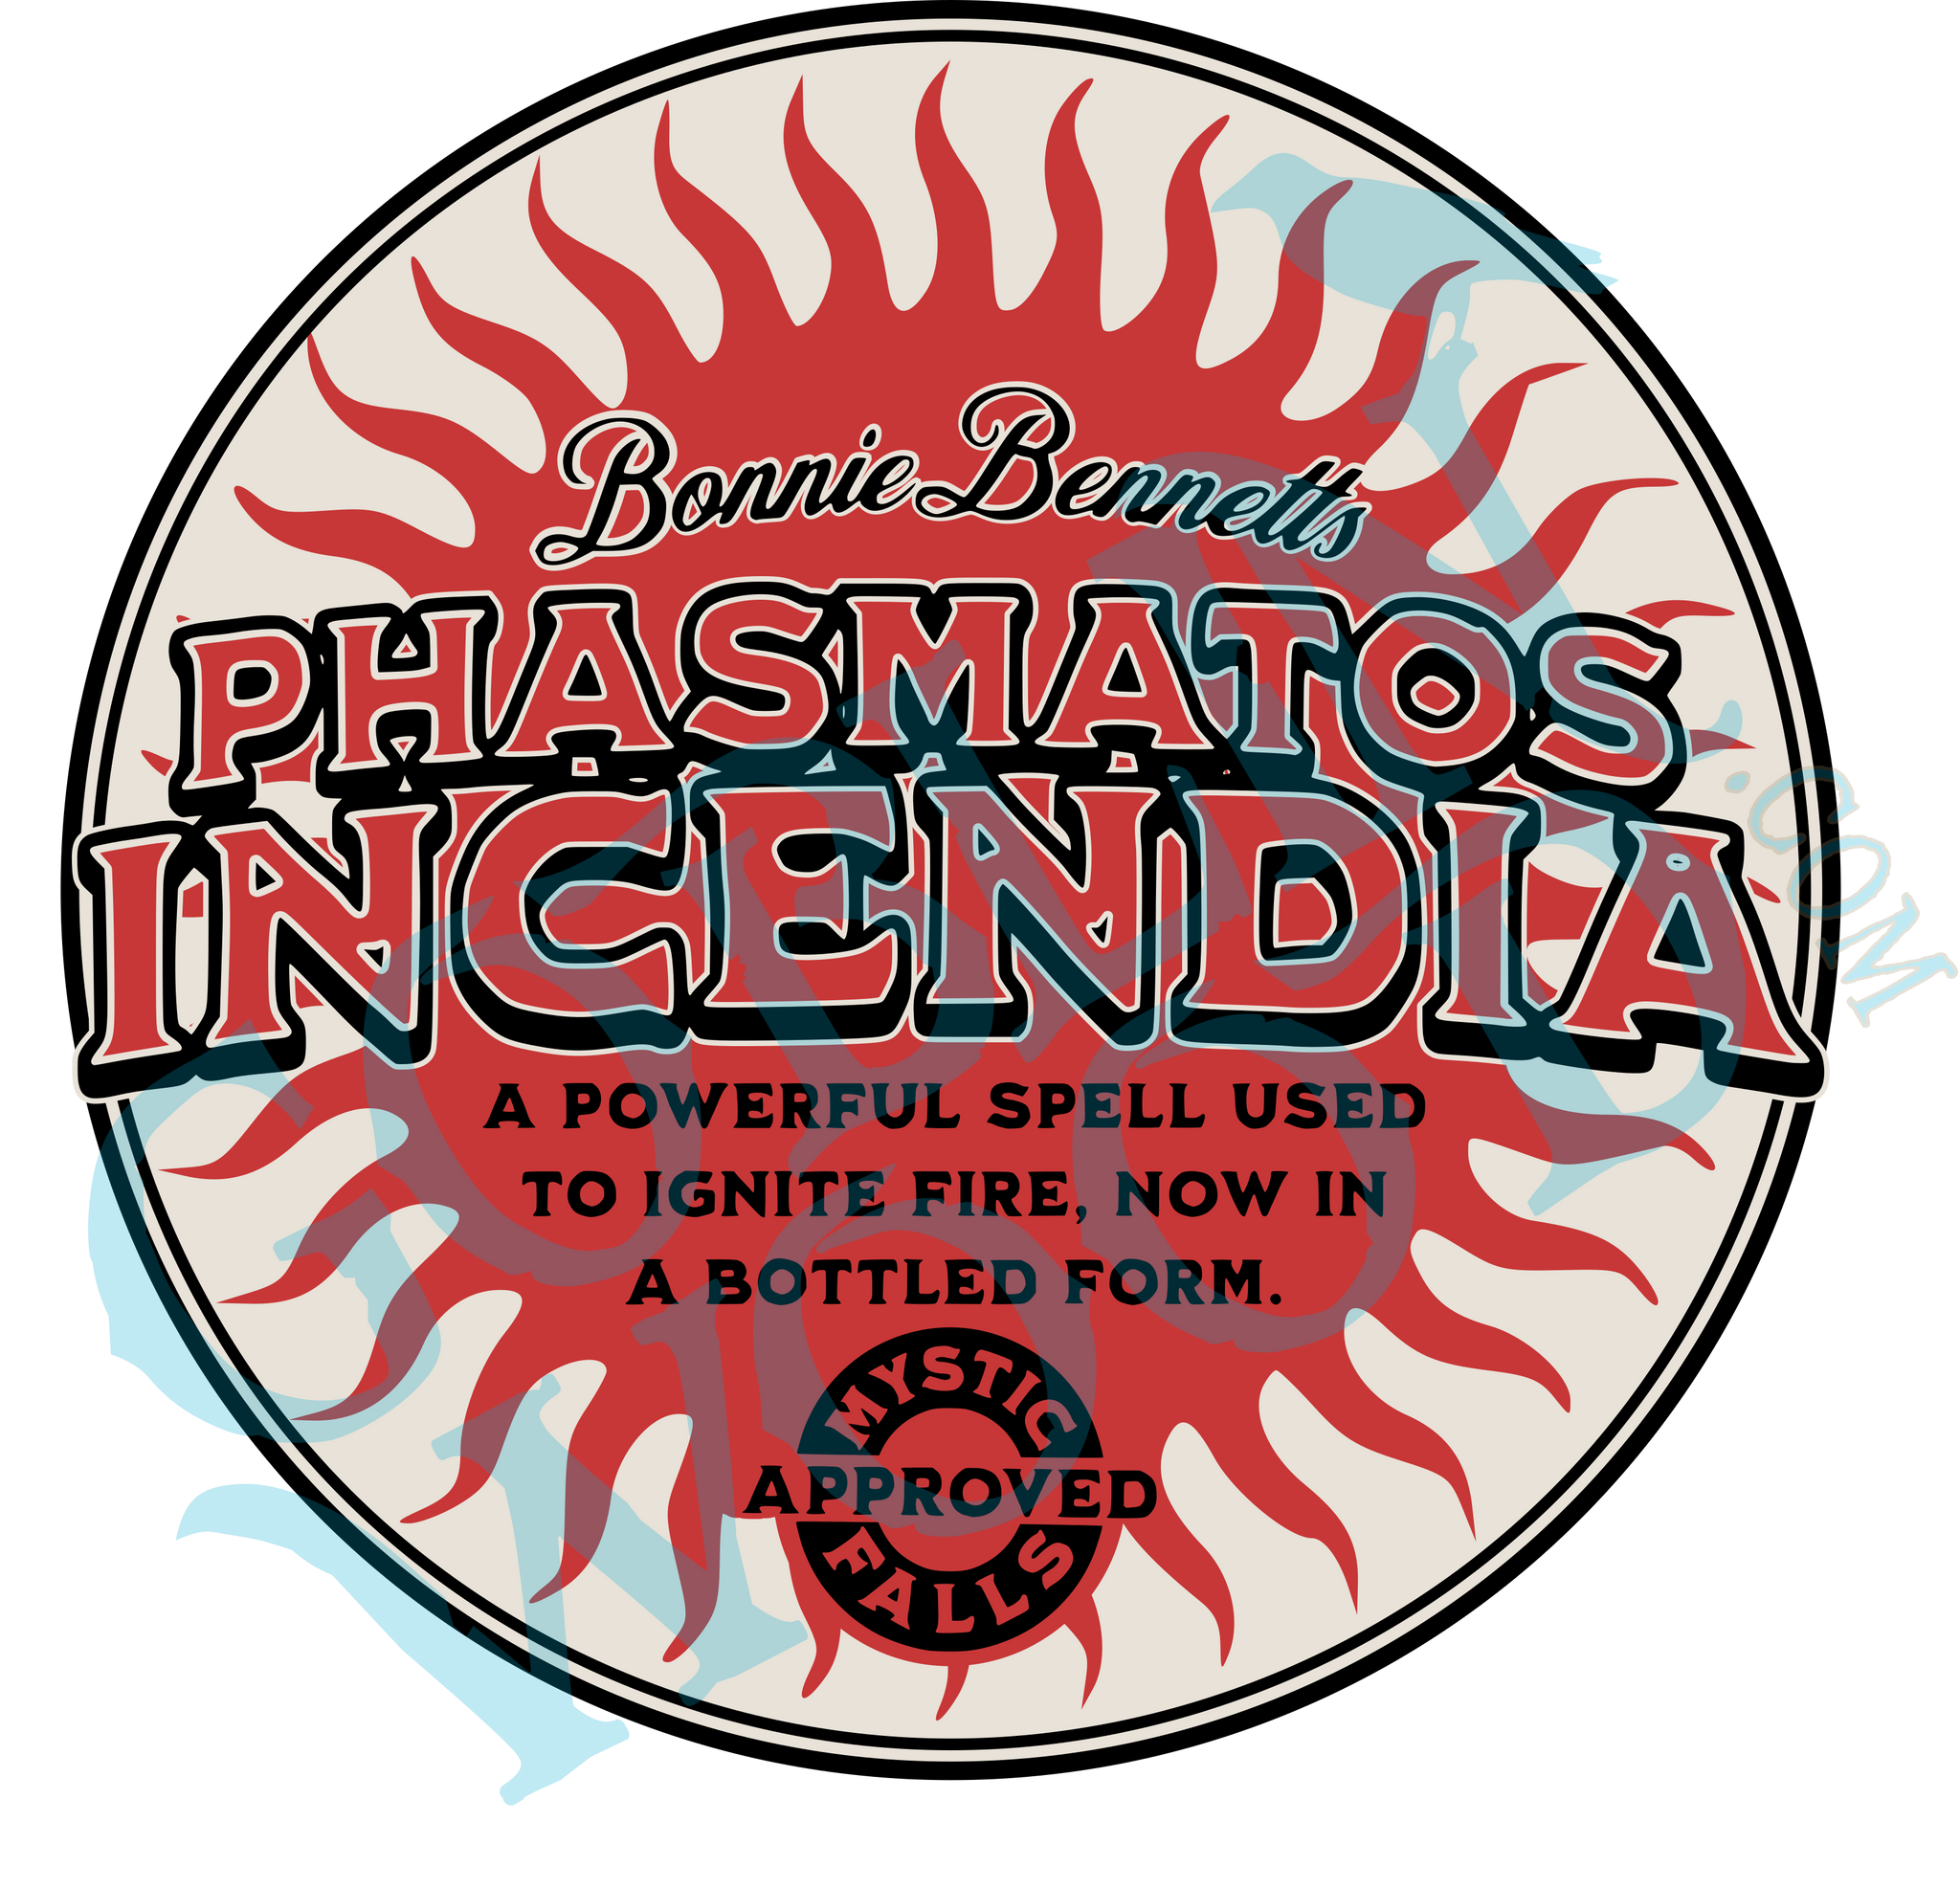 Phasmatos Incendia - TVD Inspired